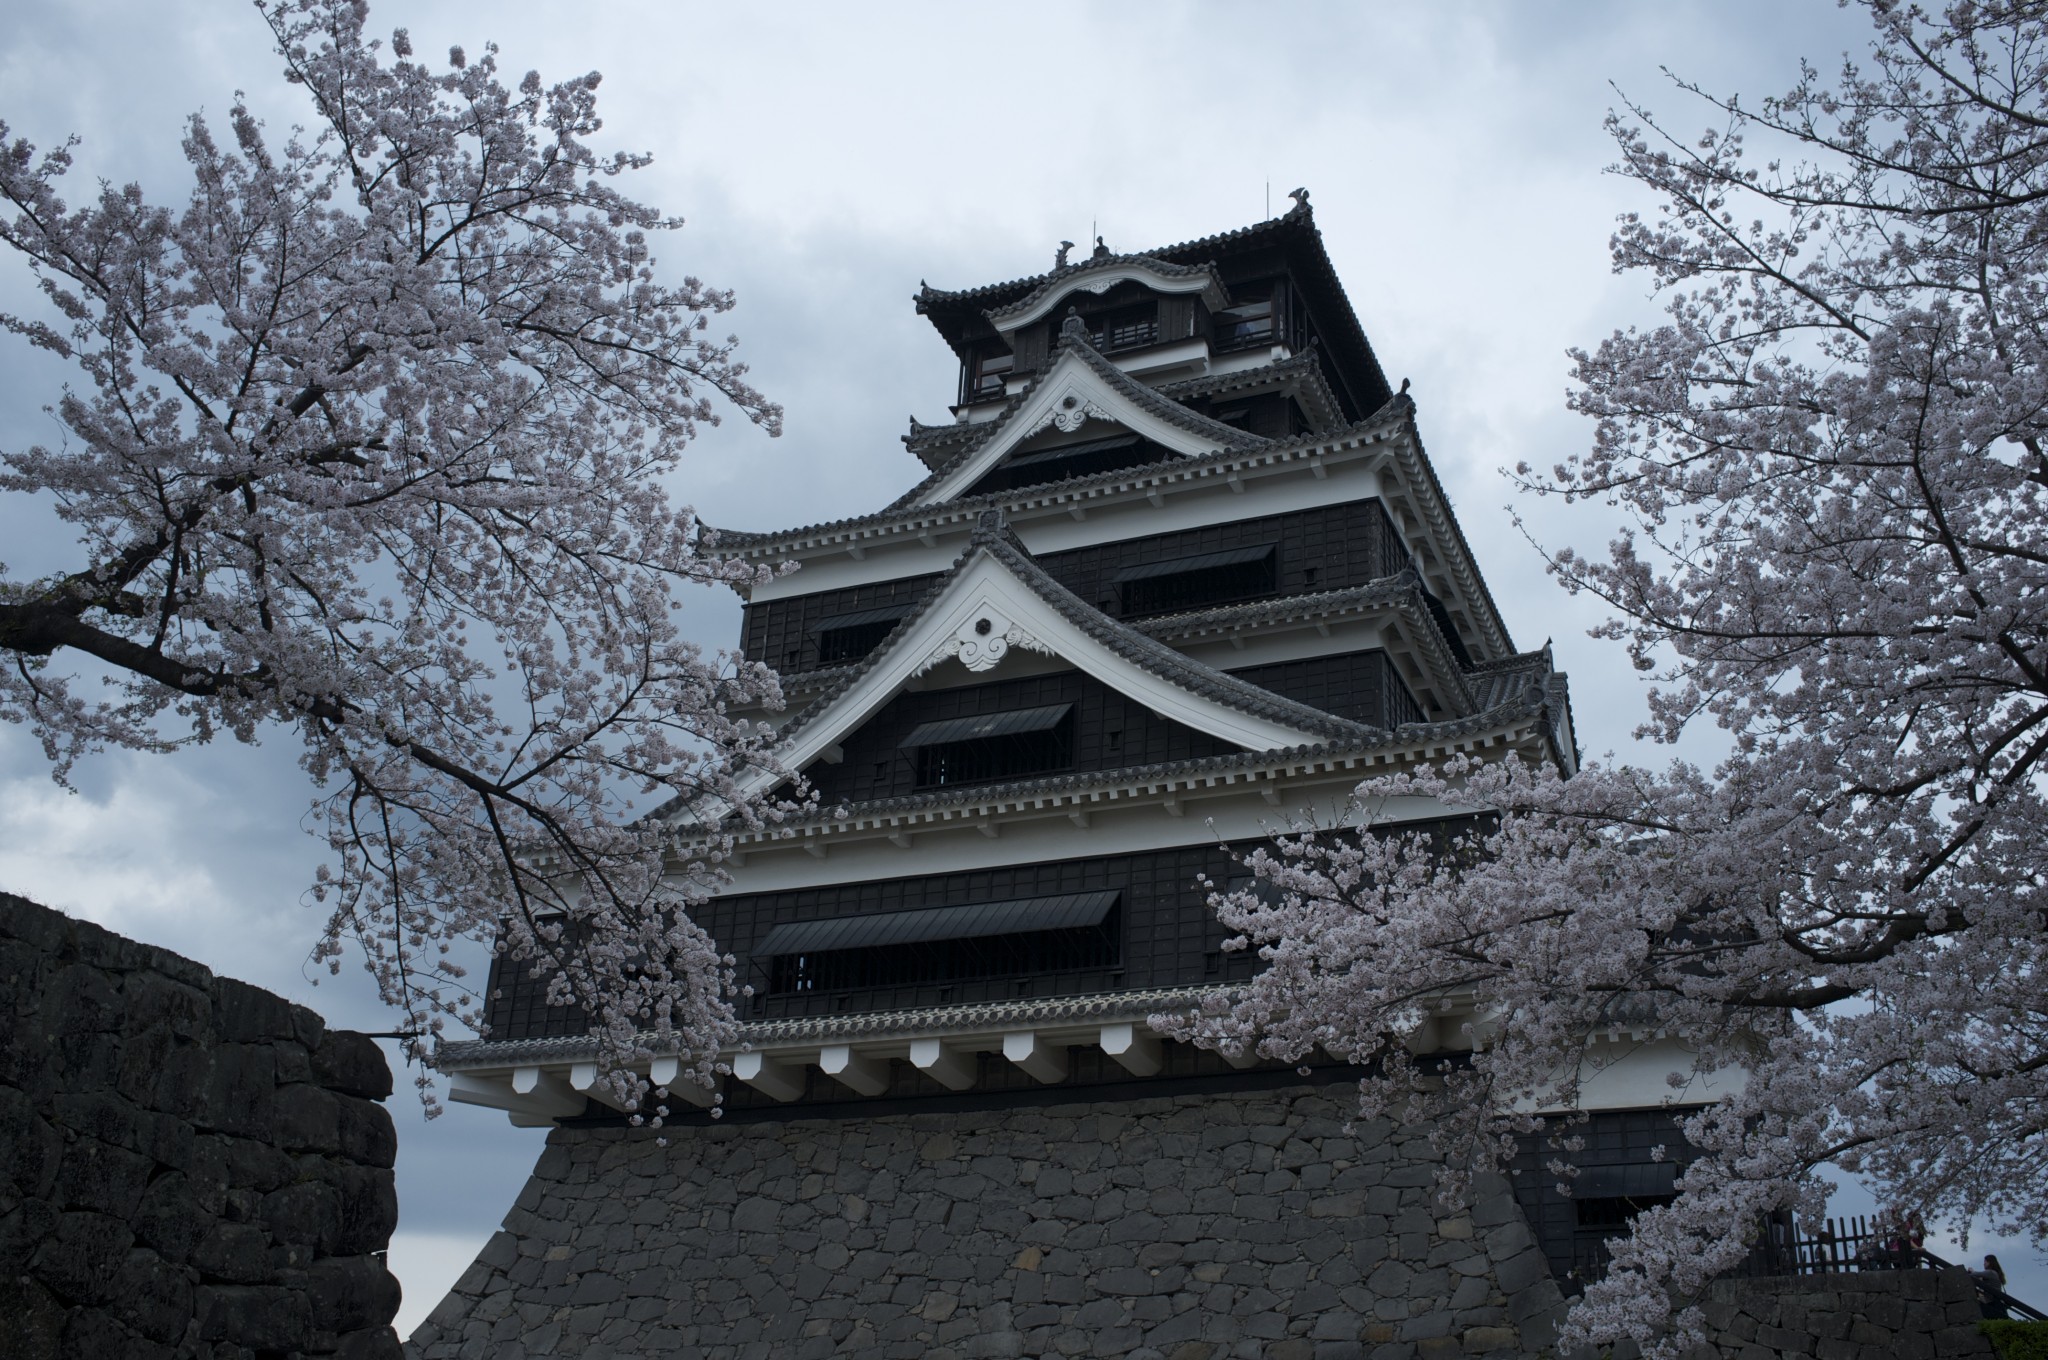 Gazing at cherry blossoms and history: hanami at Kumamoto Castle